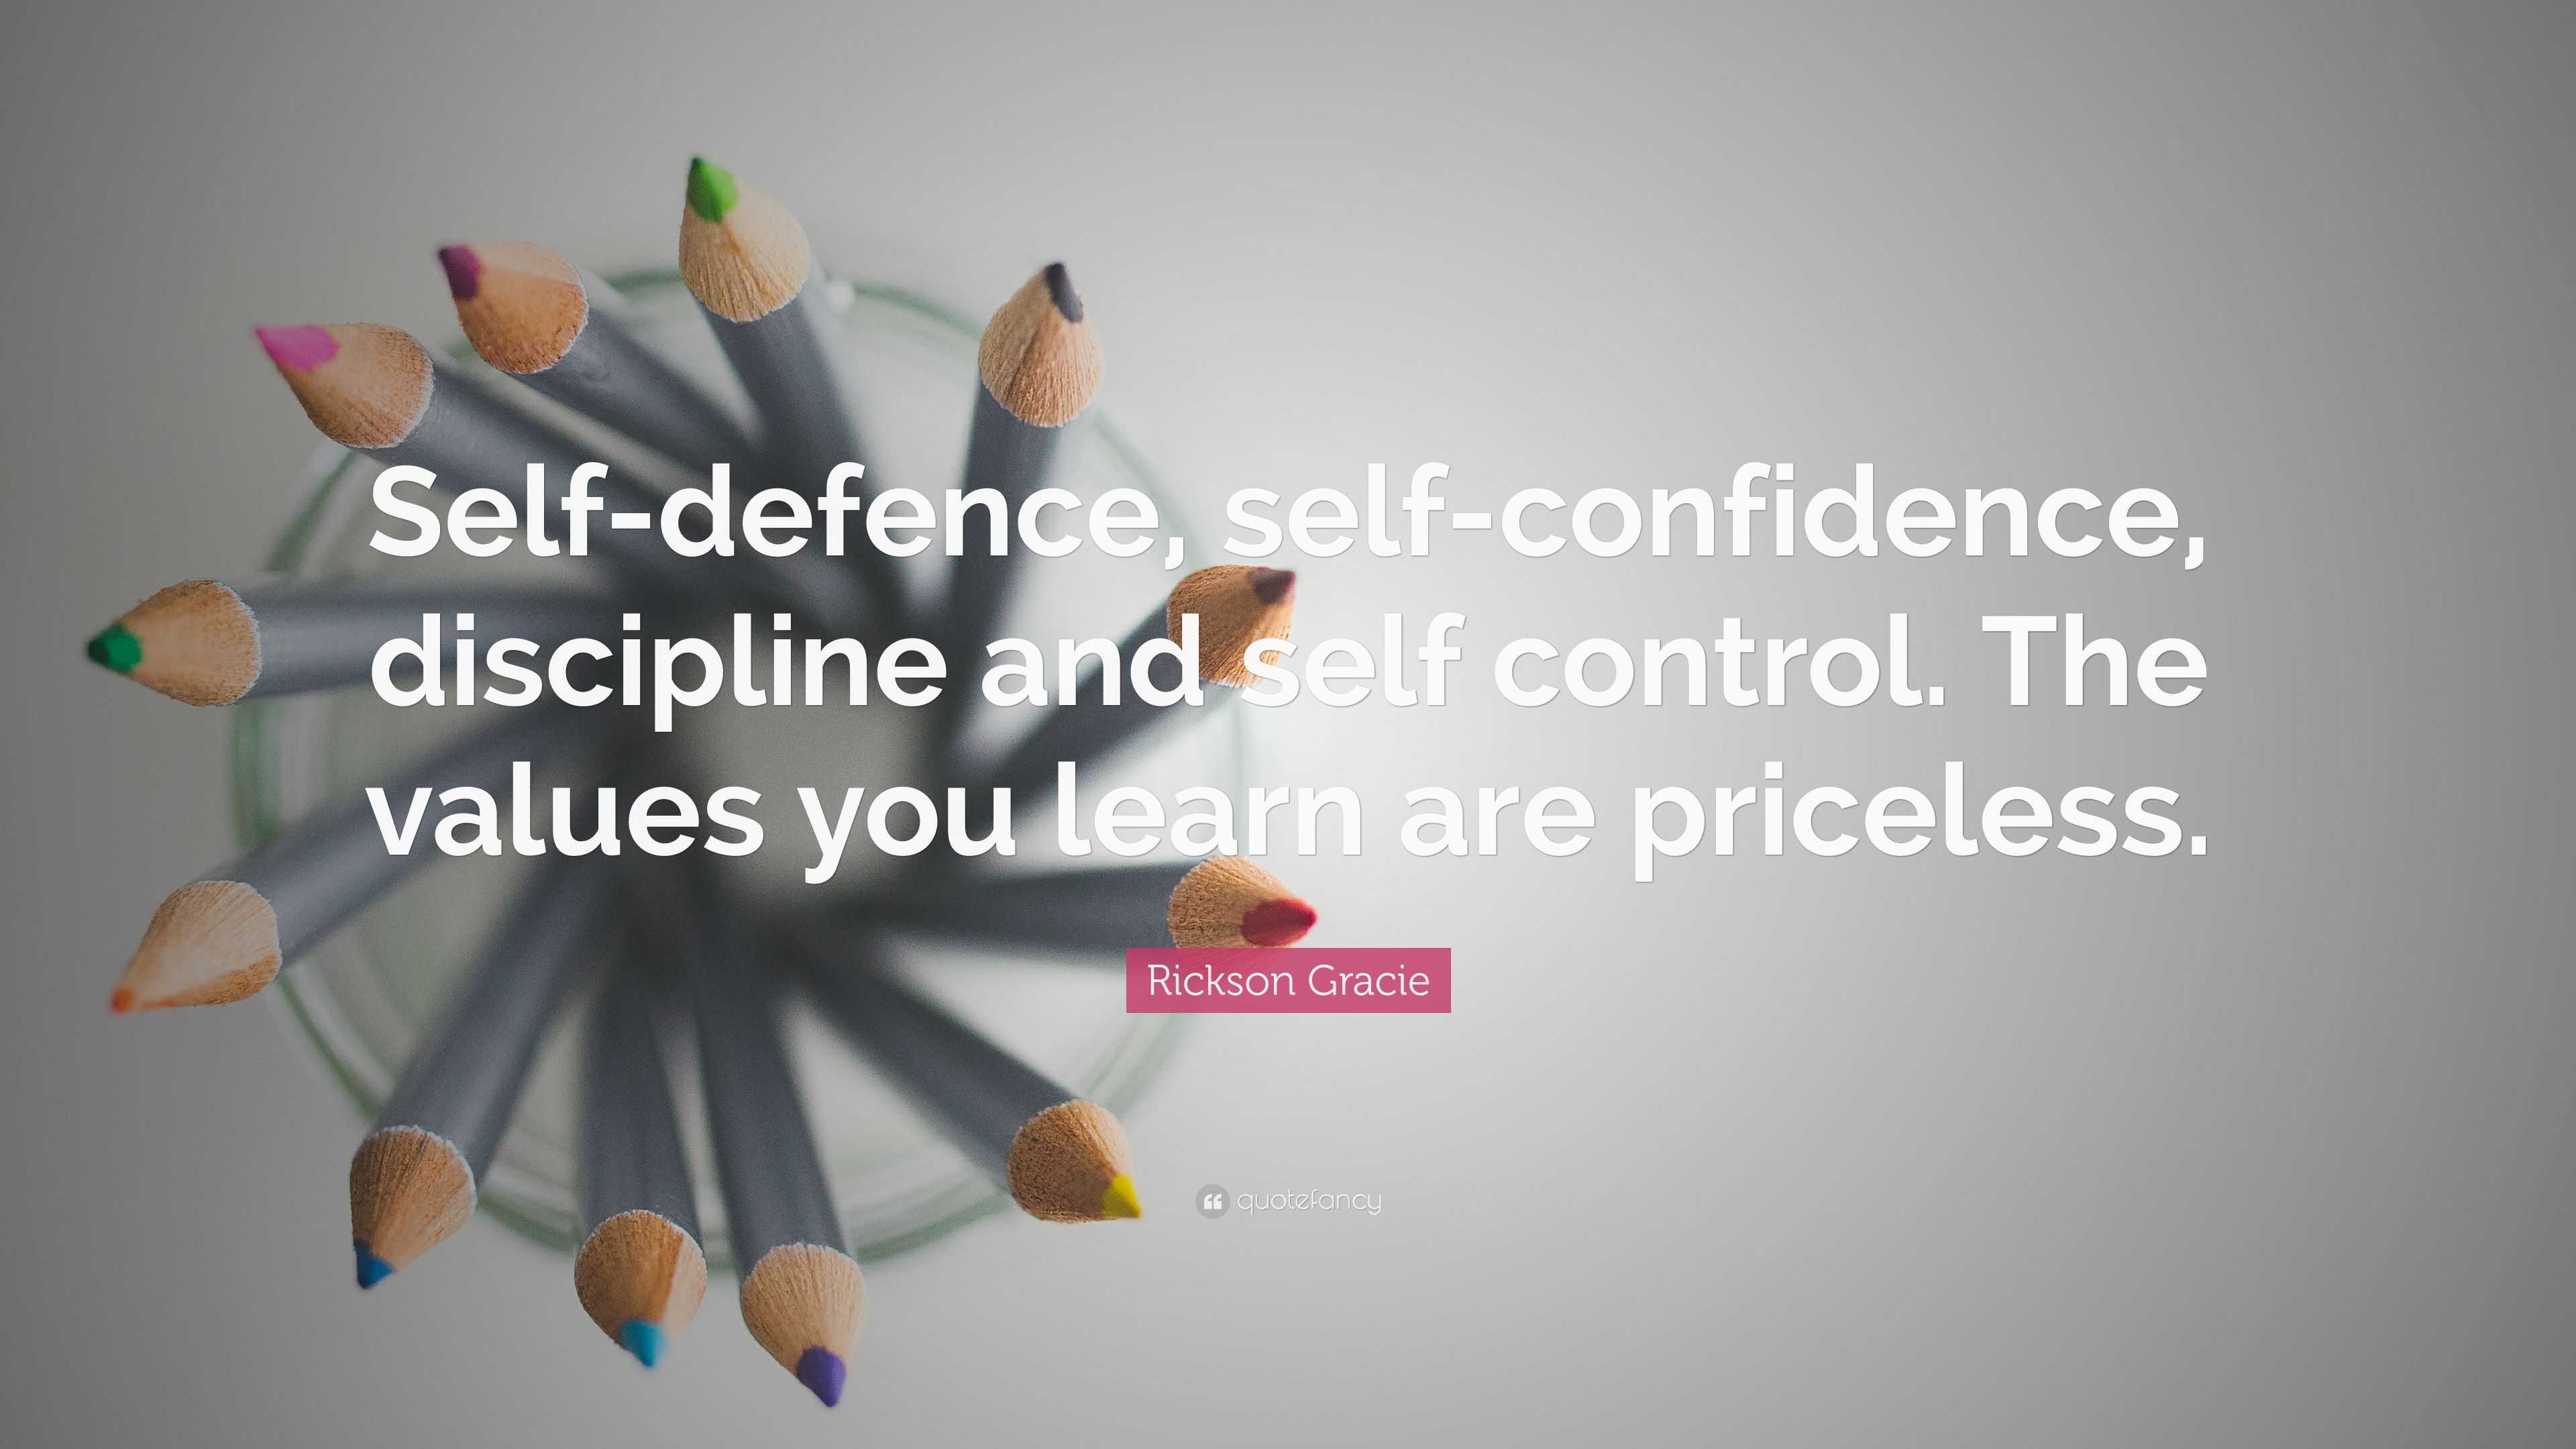 Rickson Gracie Quote: “Self-defence, self-confidence, discipline